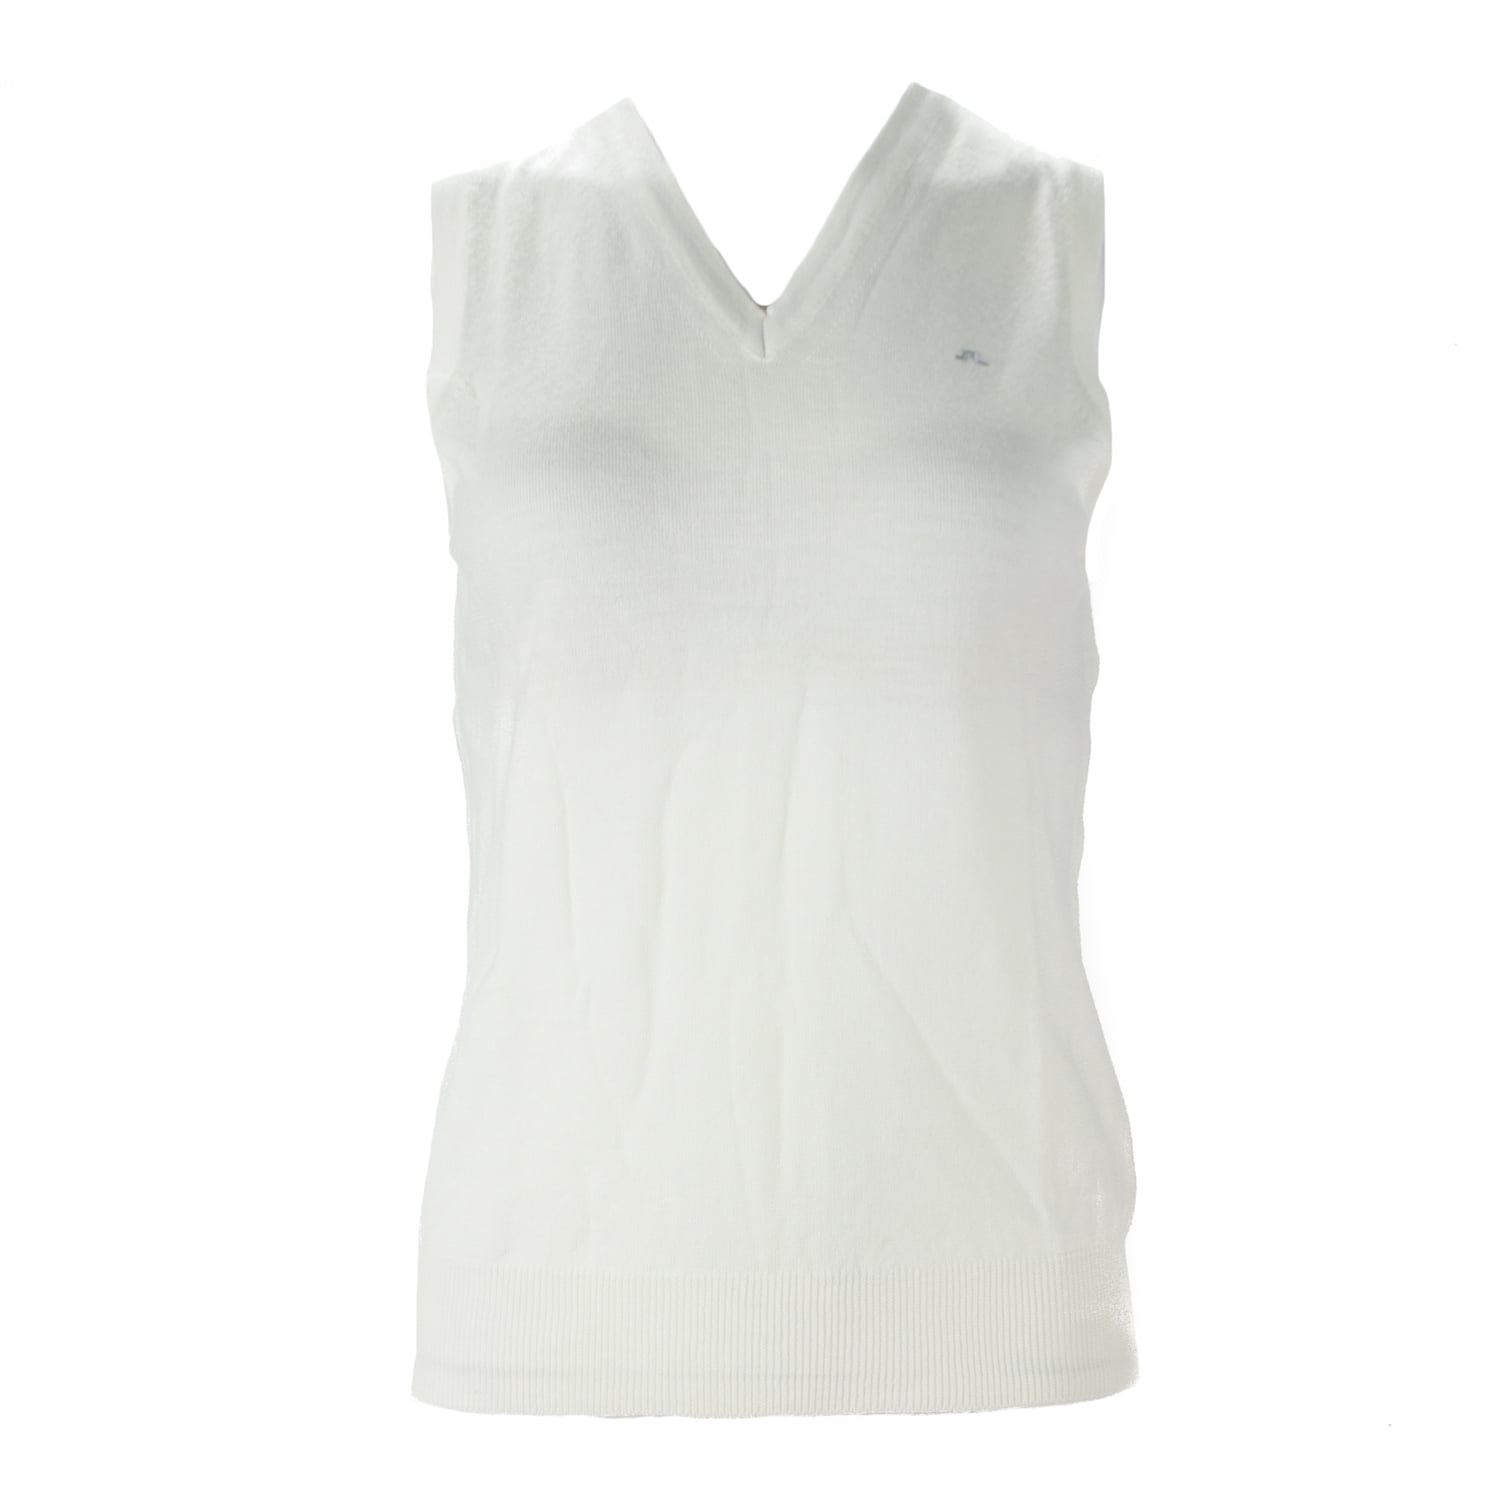 J. LINDEBERG Women's Aya Merino Knit Sweater Vest, White, Large -  Walmart.com